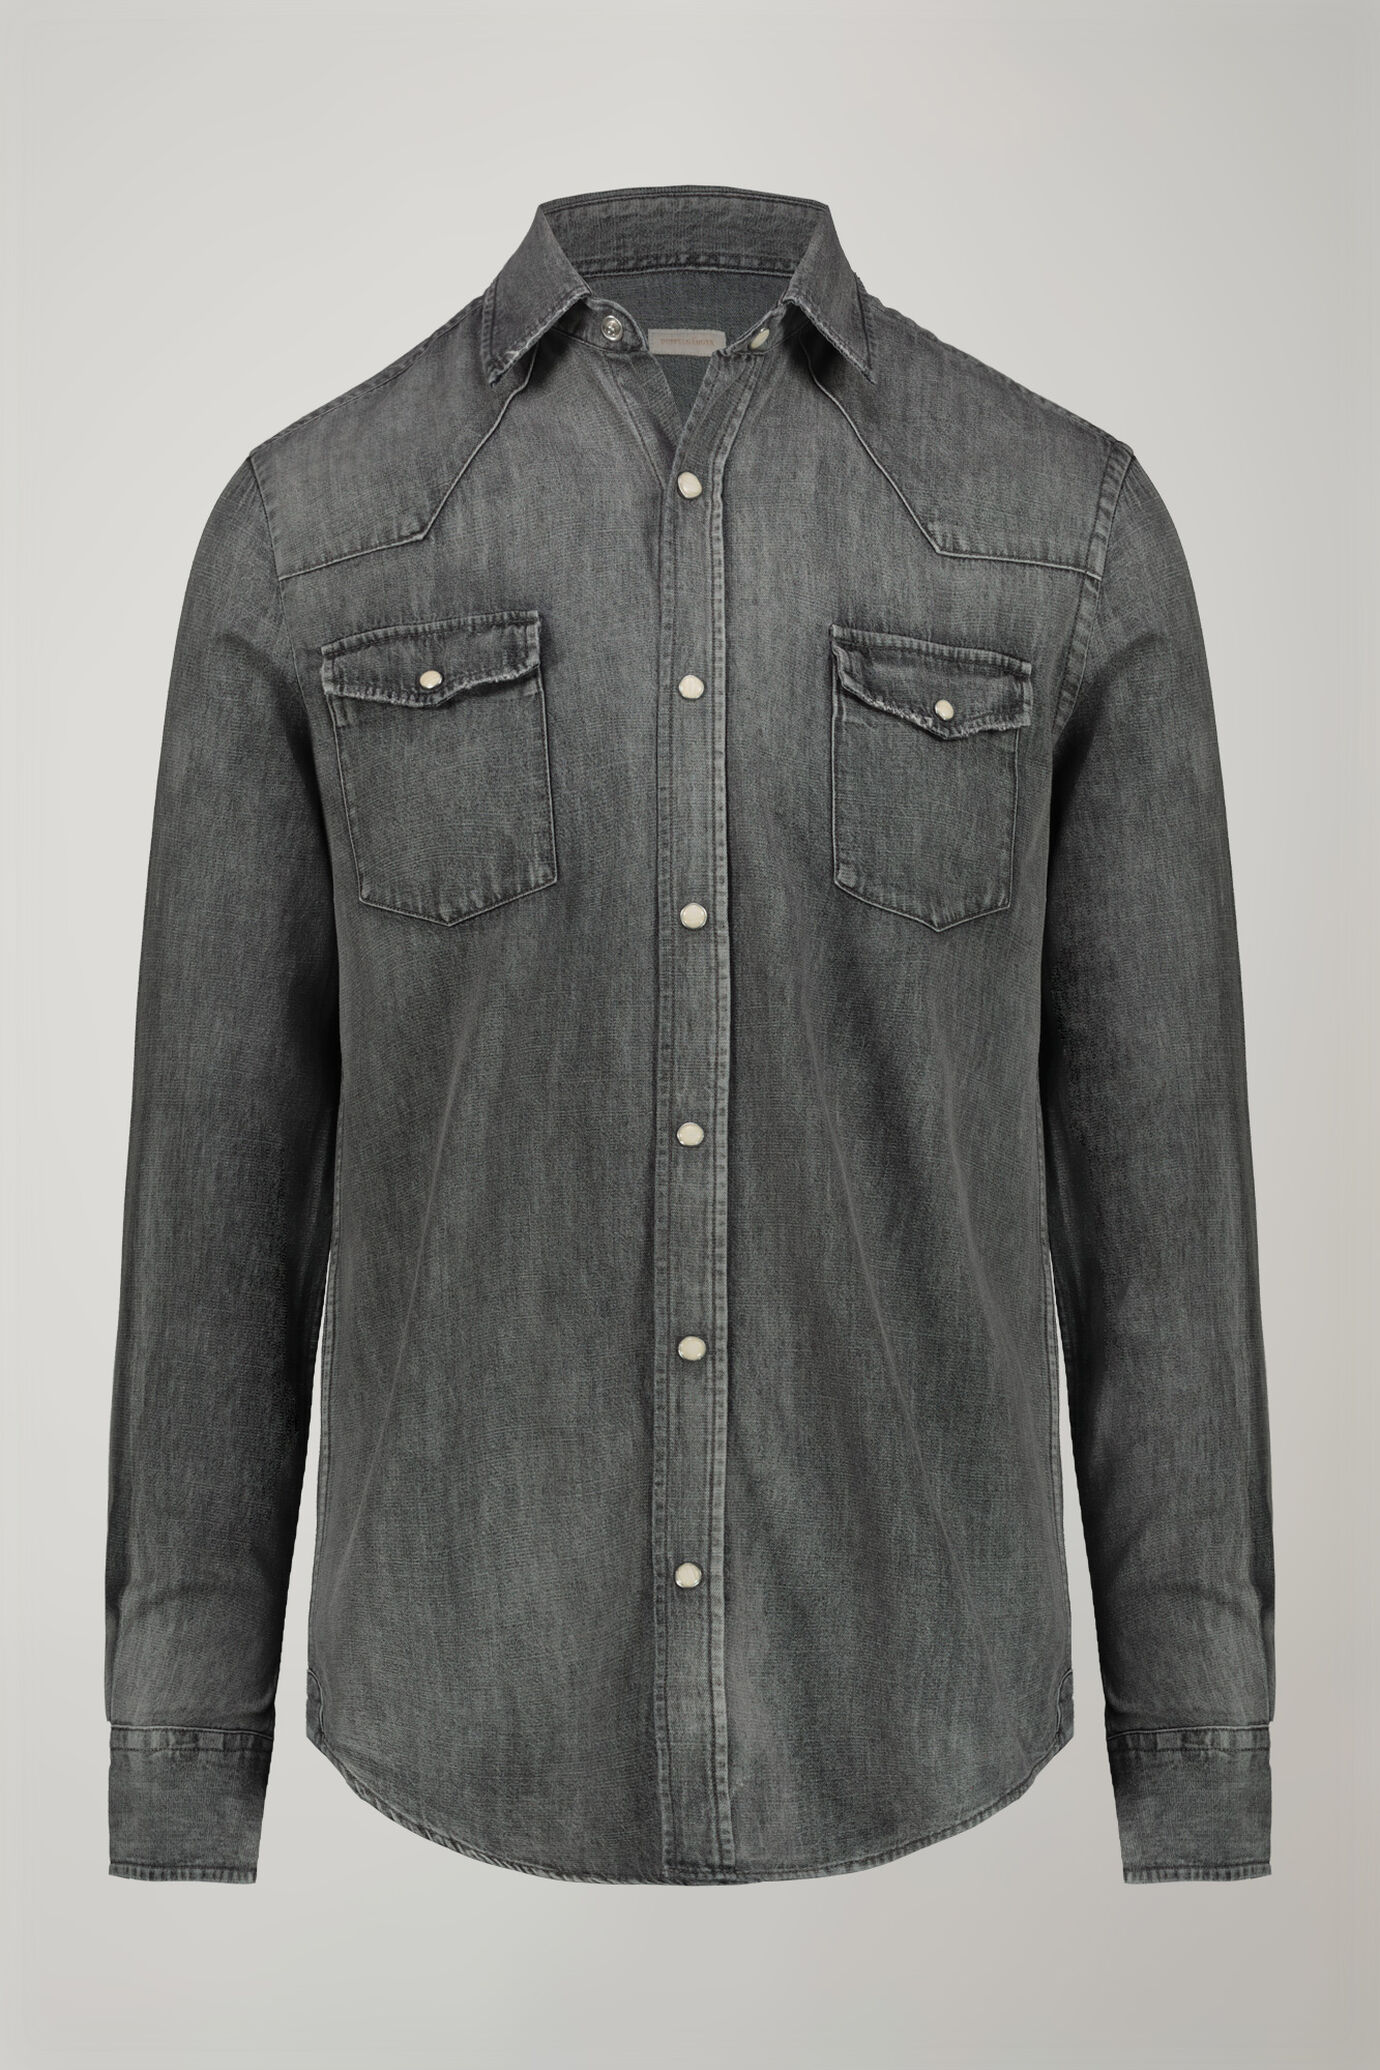 Camicia casual uomo collo classico 100% cotone tessuto denim comfort fit image number 5